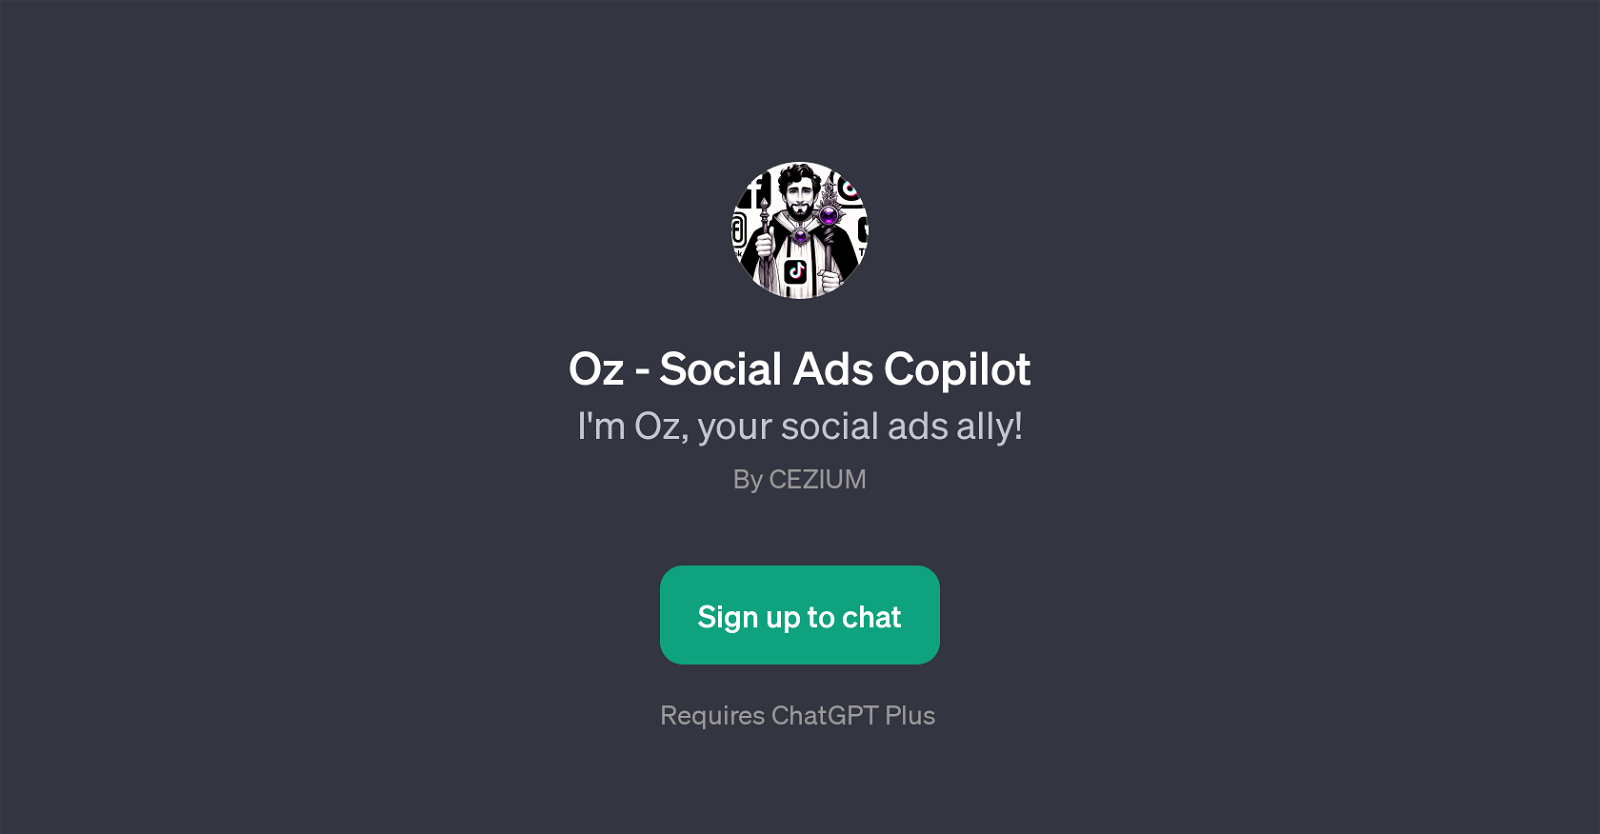 Oz - Social Ads Copilot website